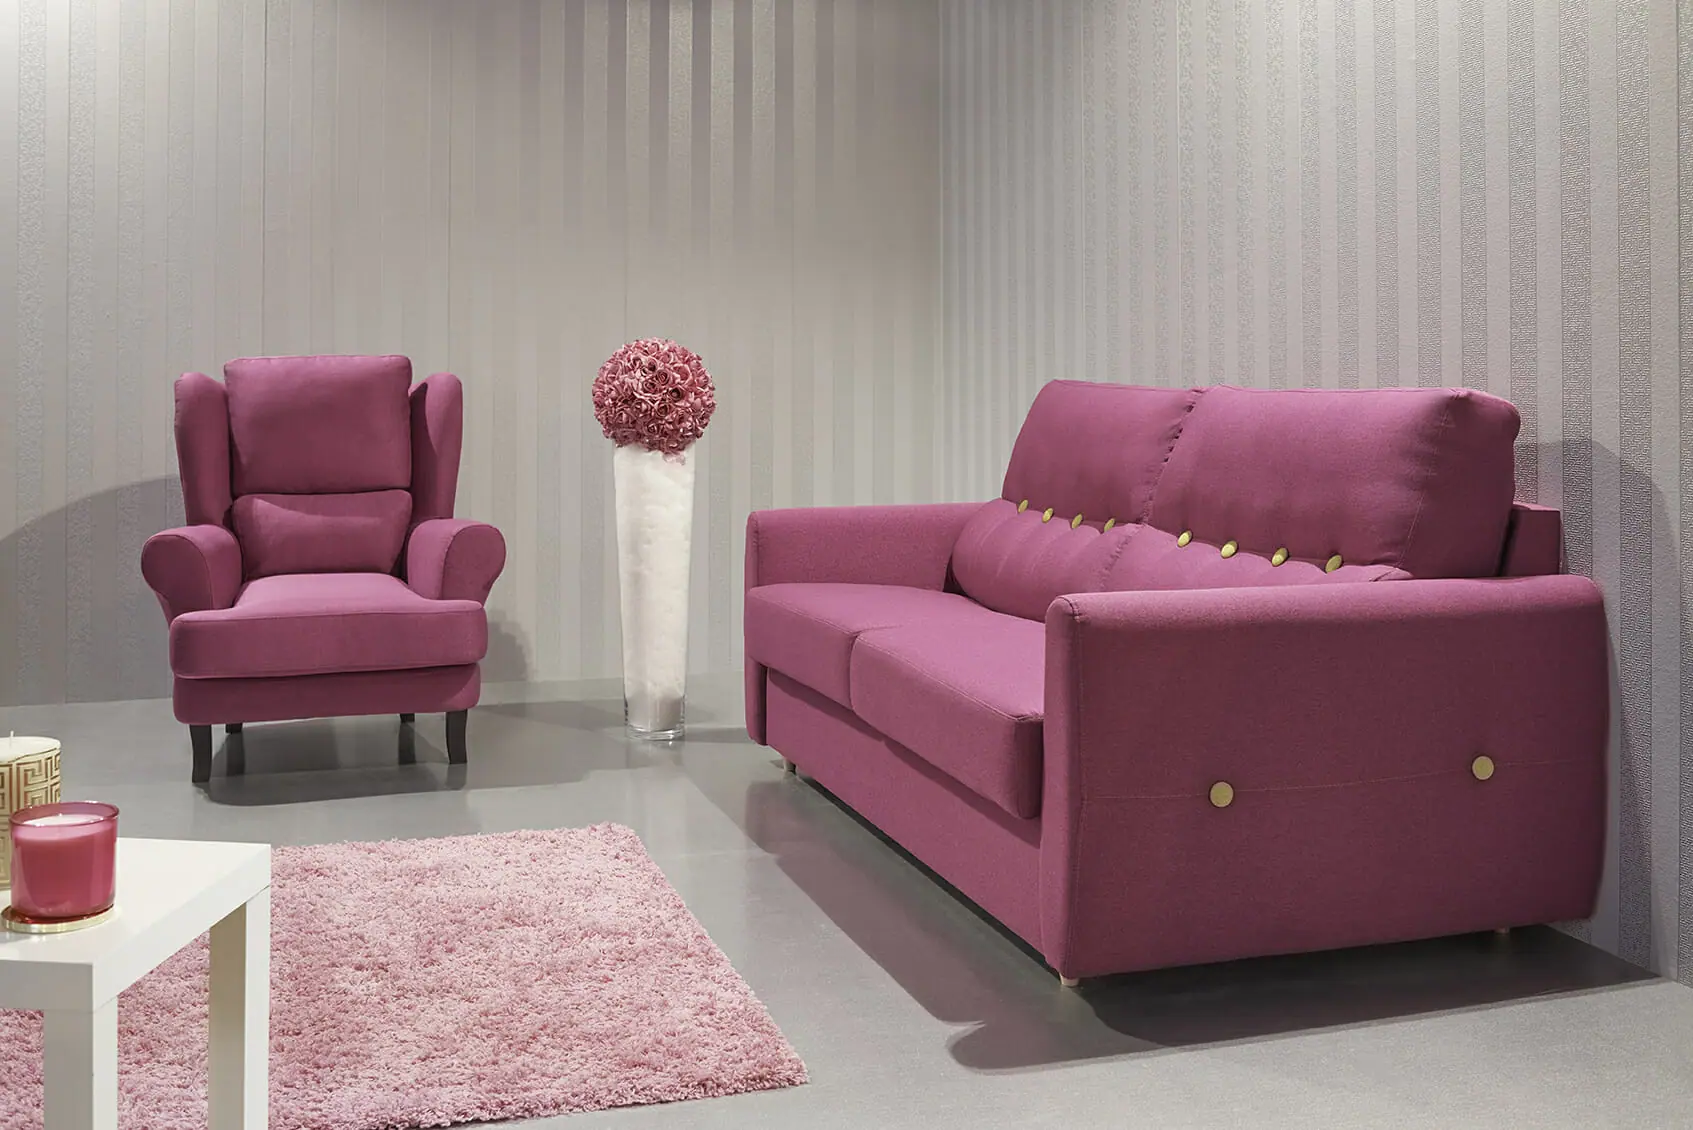 17551-17553-sofas-armchairs